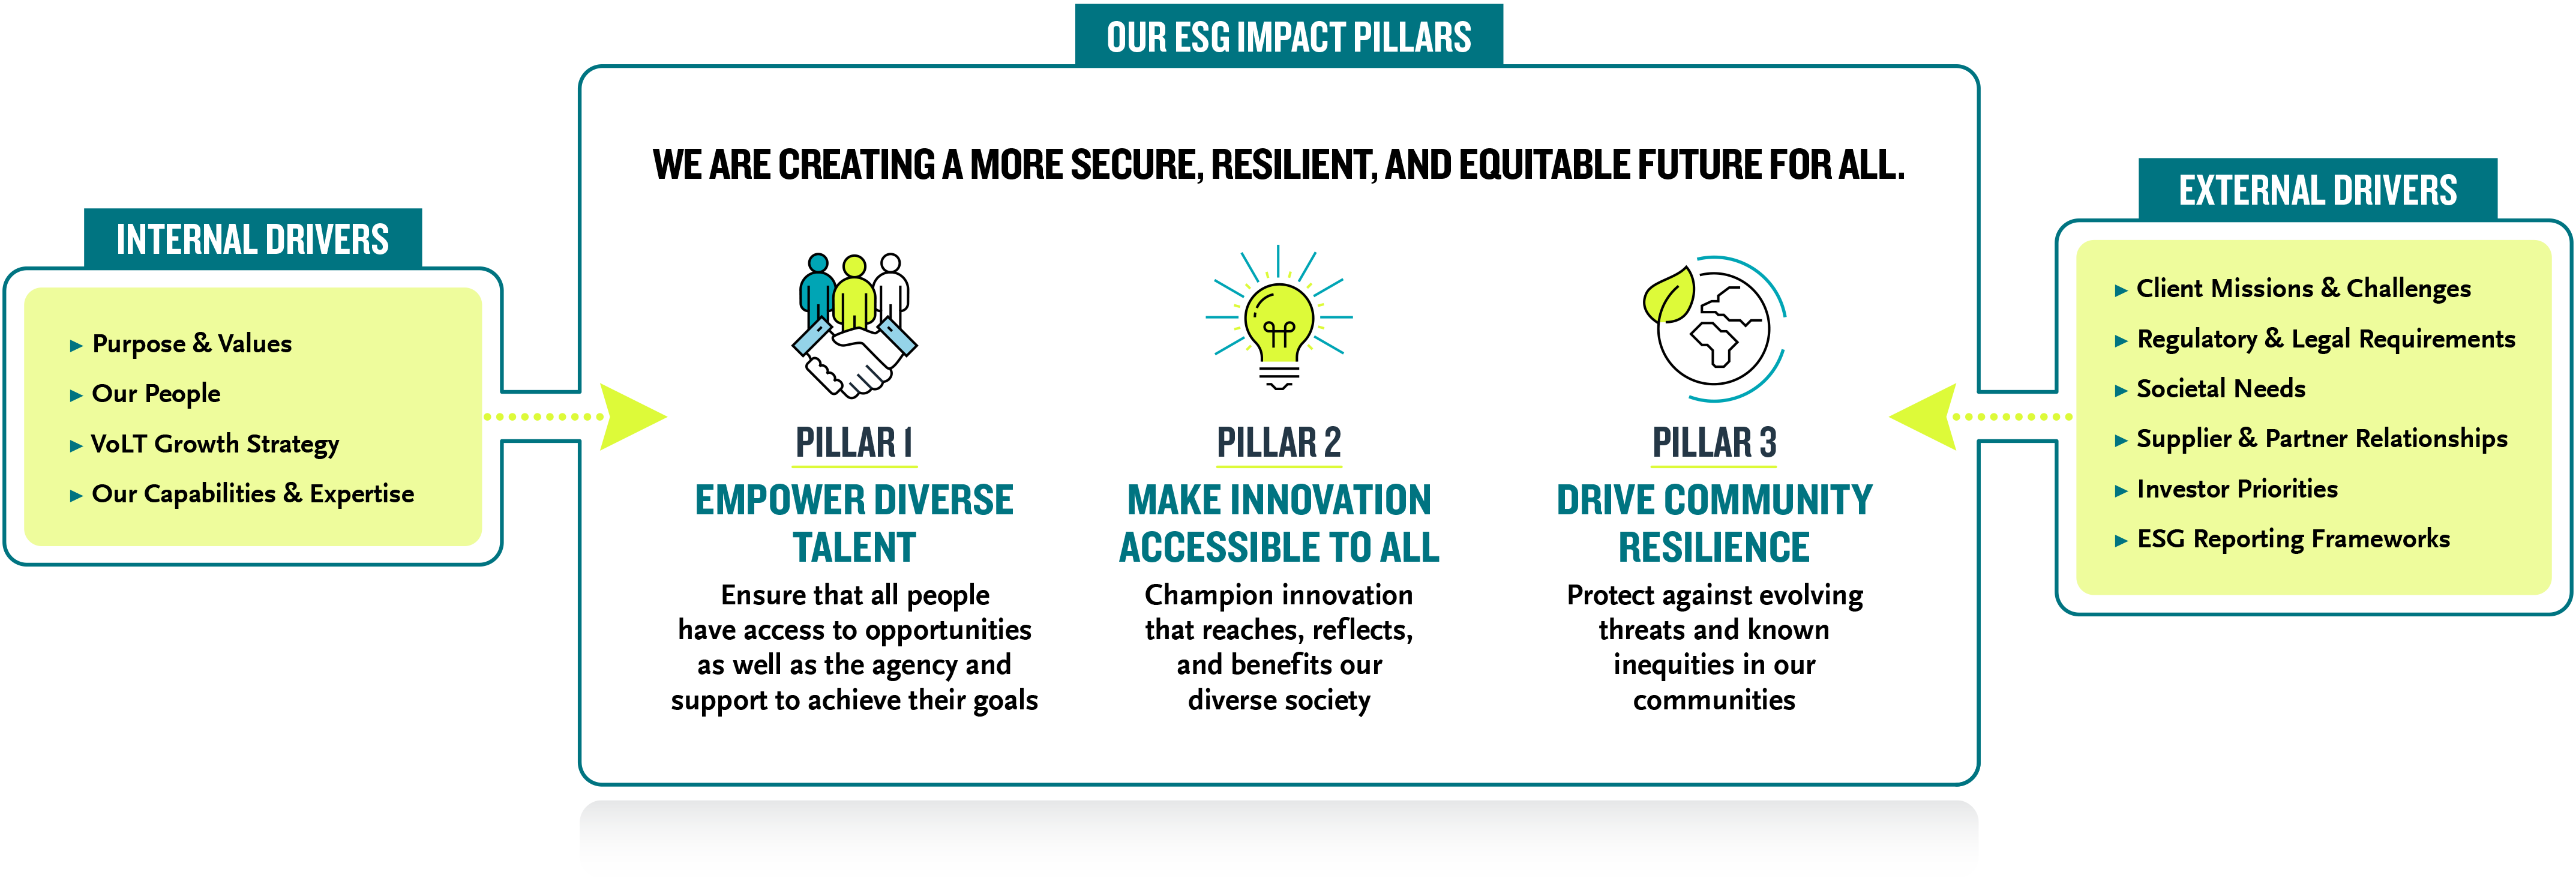 Pillar 1, Empower Diverse Talent. Pillar 2, Make Innovation Accessible to All. Pillar 3, Drive Community Resilience